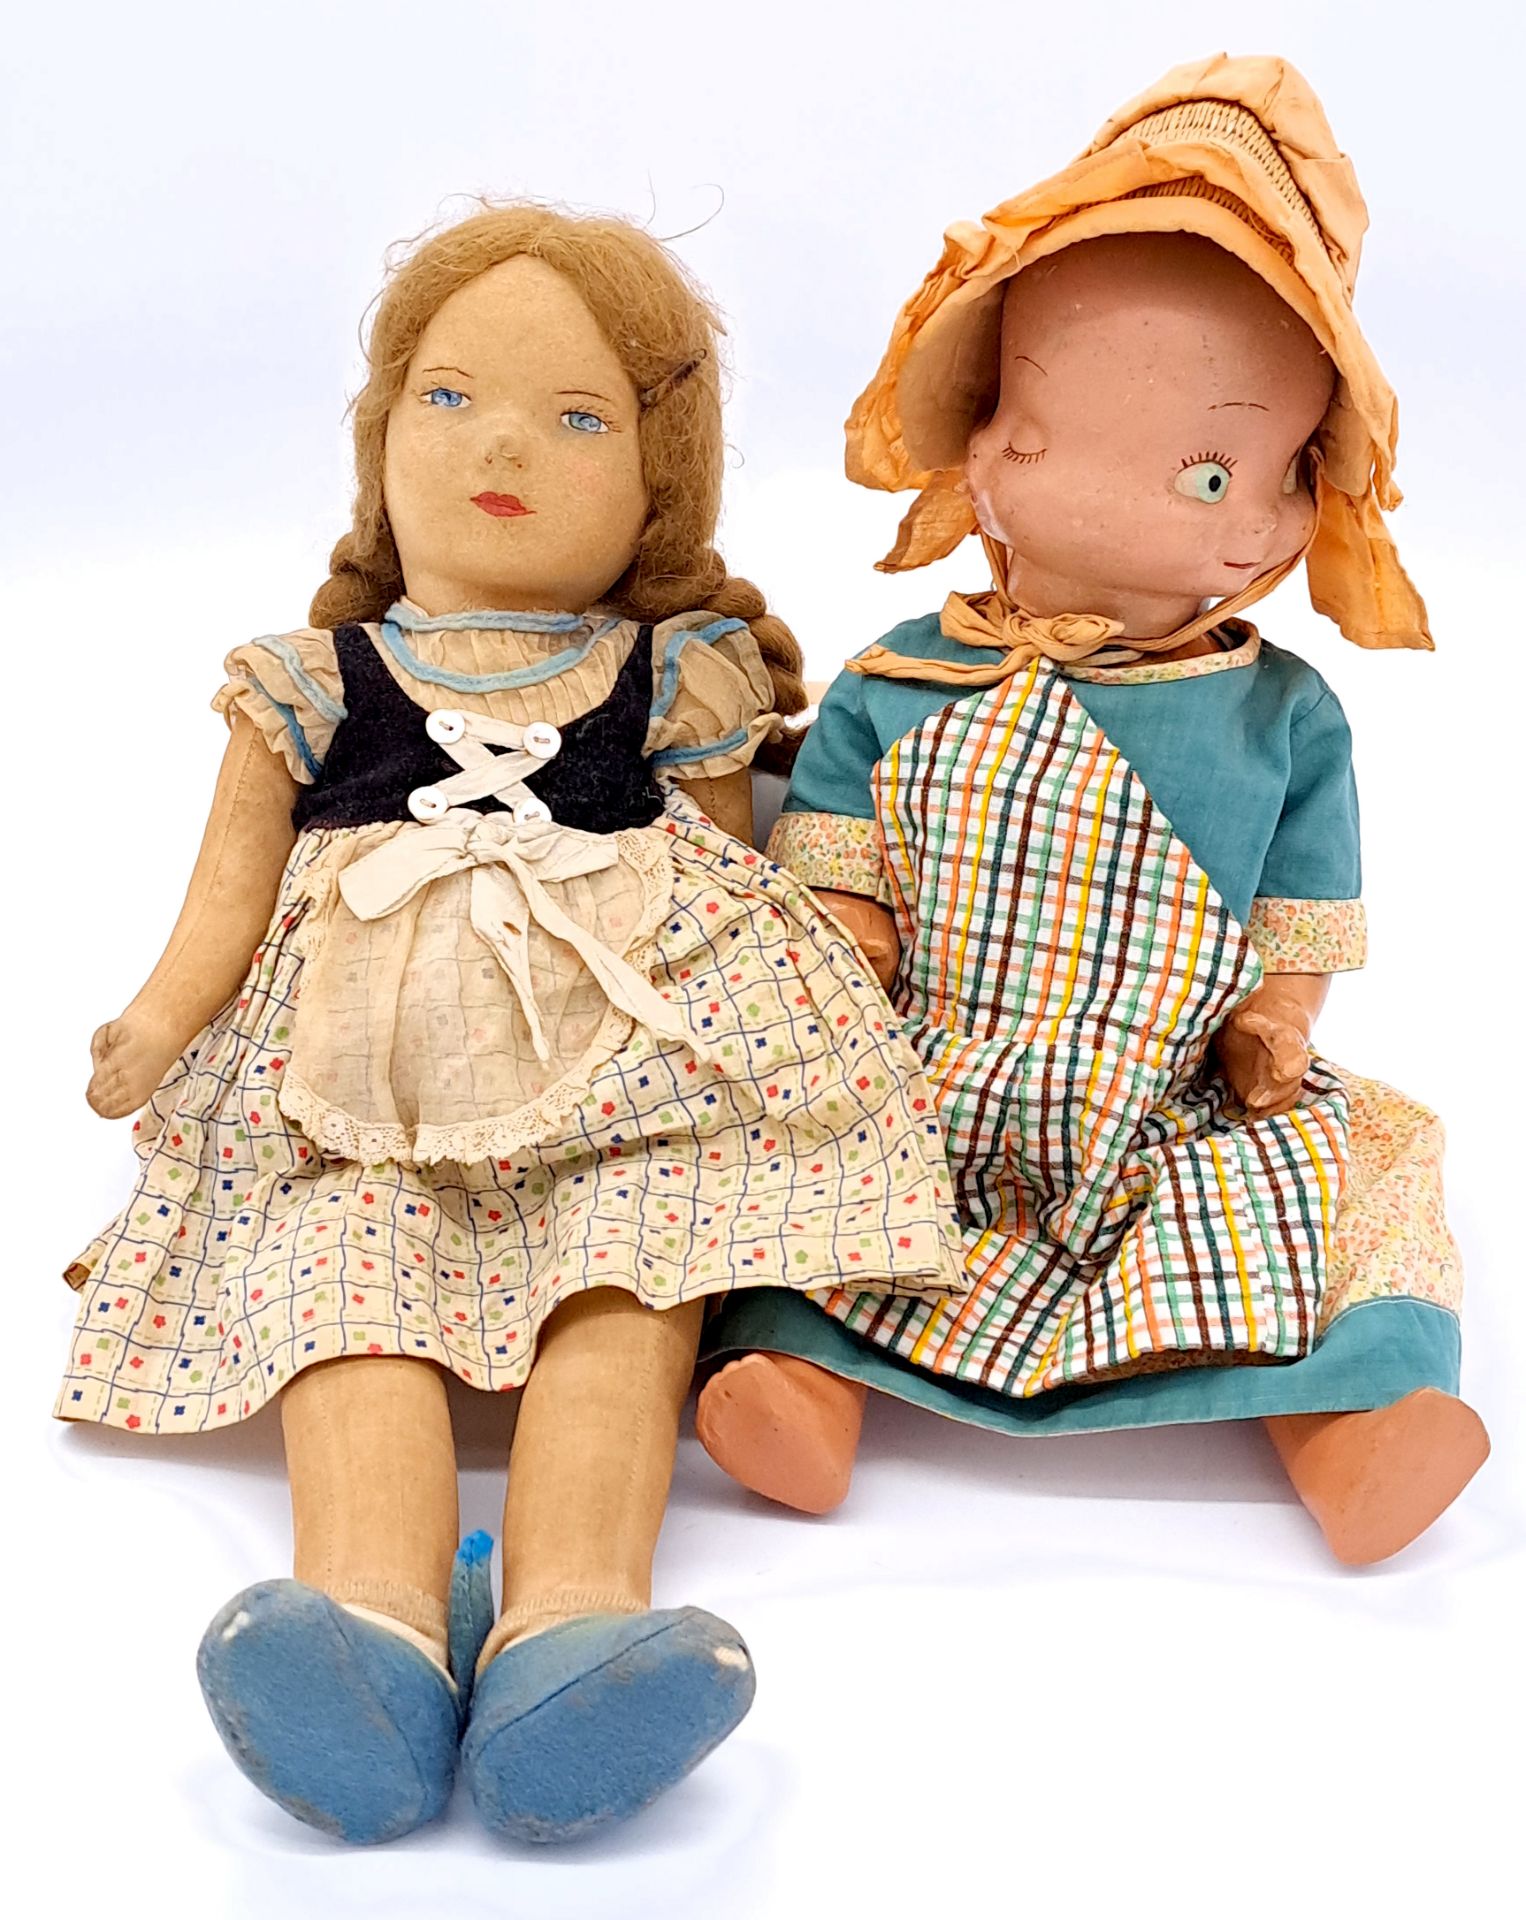 Vintage dolls x 2